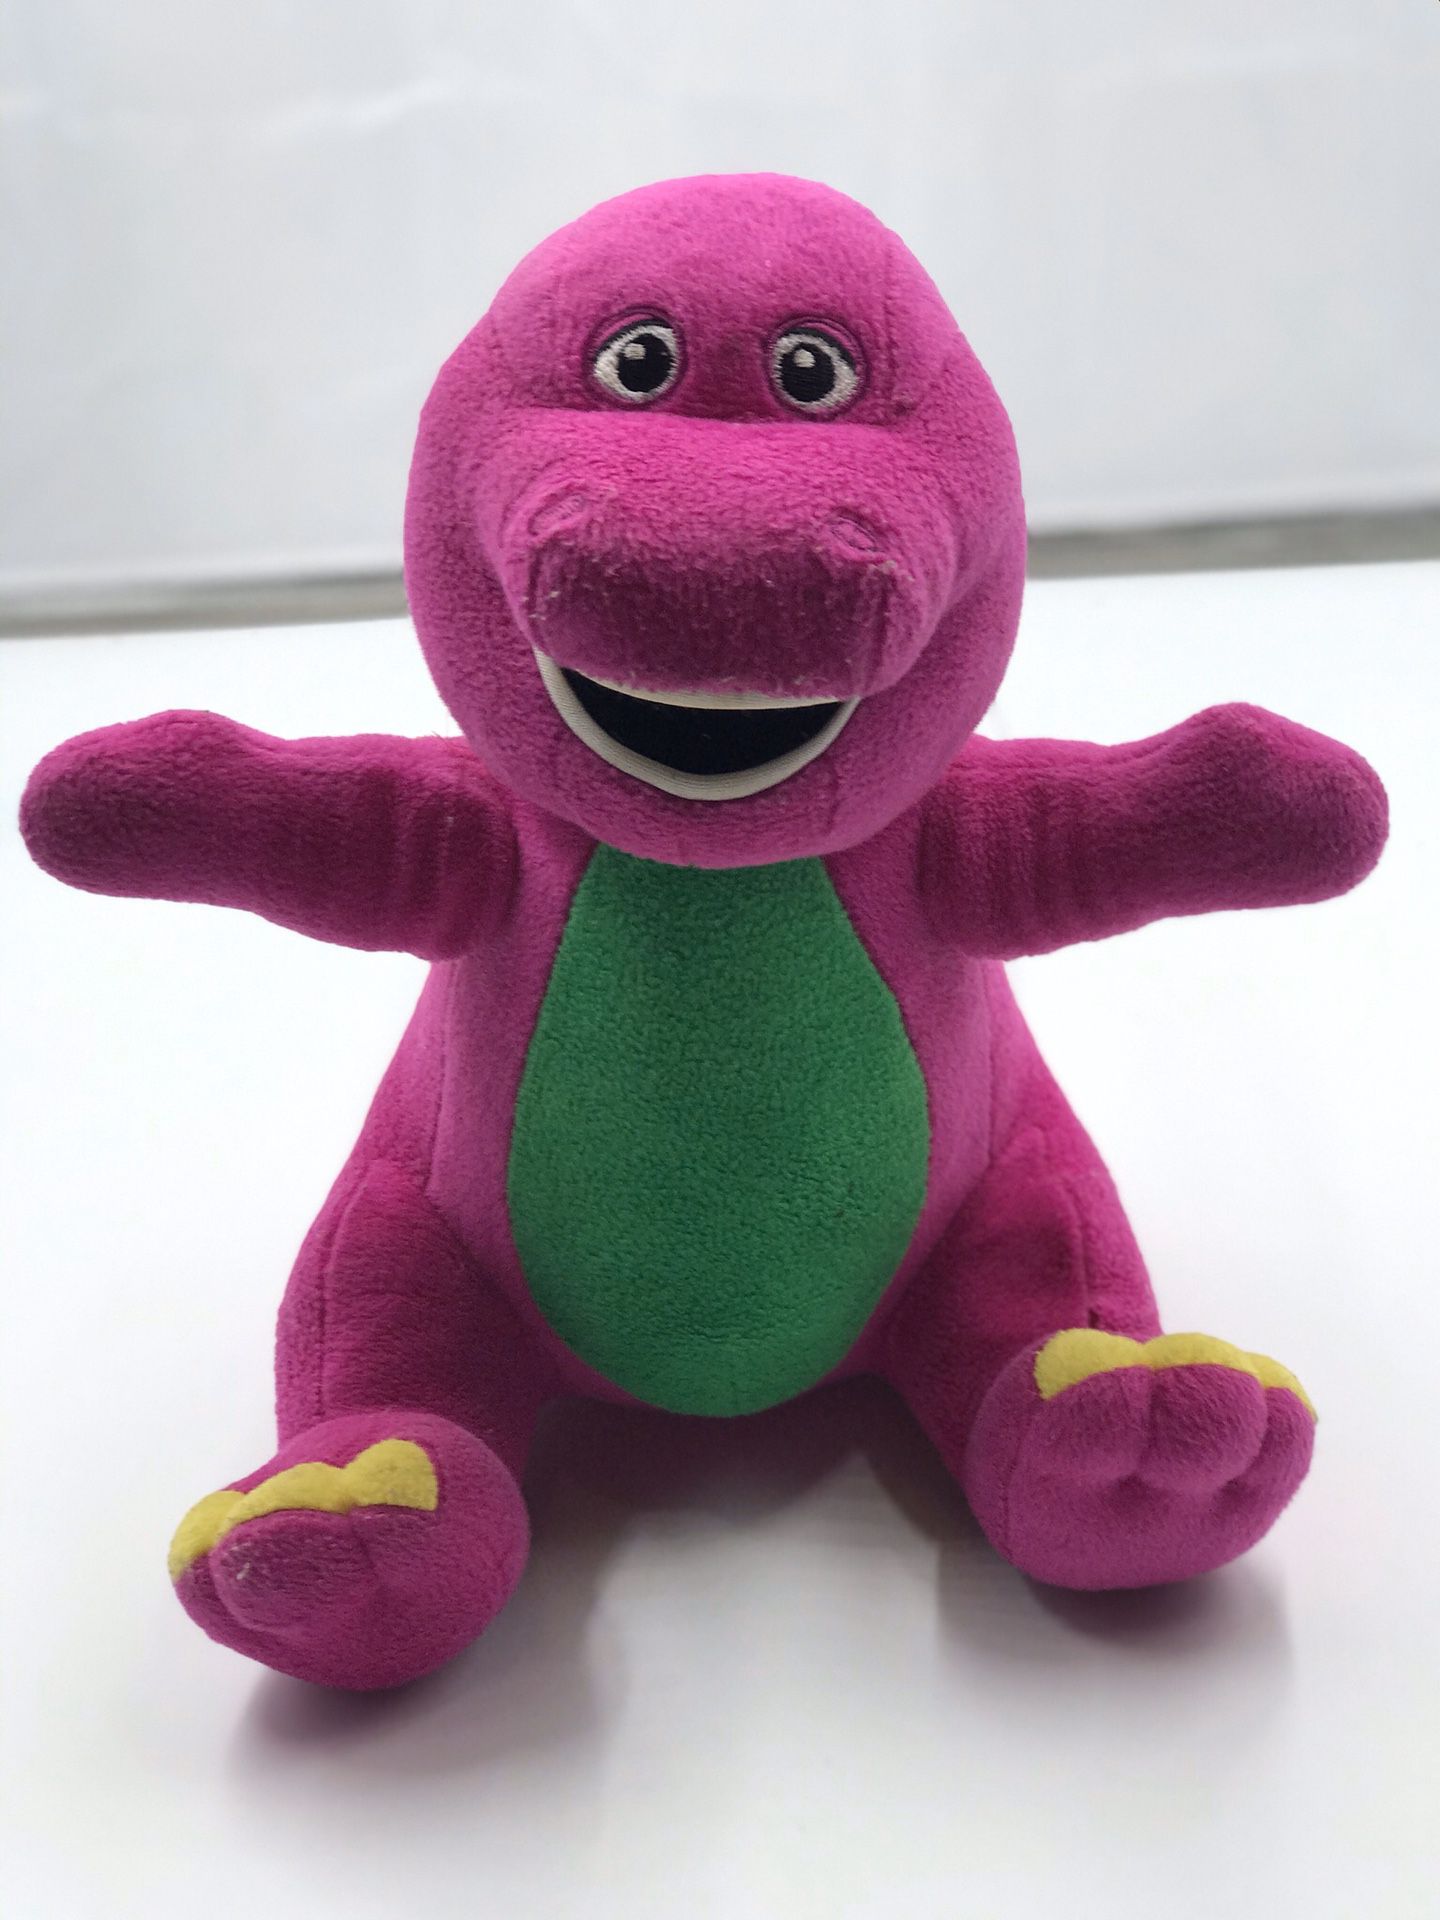 Stuffed plush 13” Barney Dinosaur! Great condition!